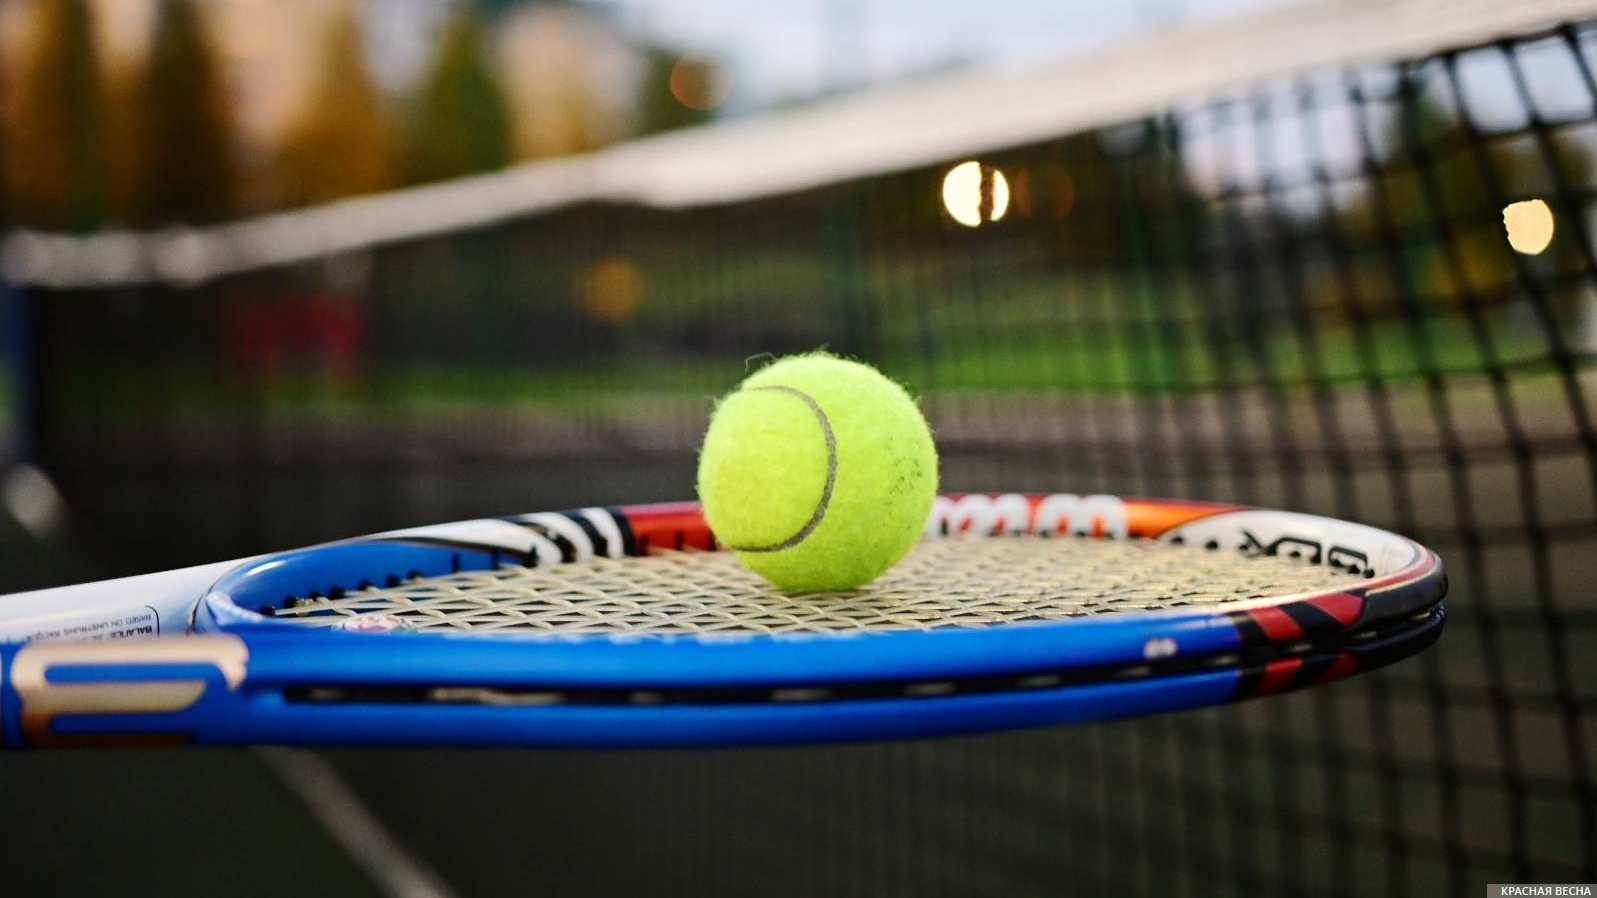 Циципас победил во втором круге теннисного турнира в Штутгарте